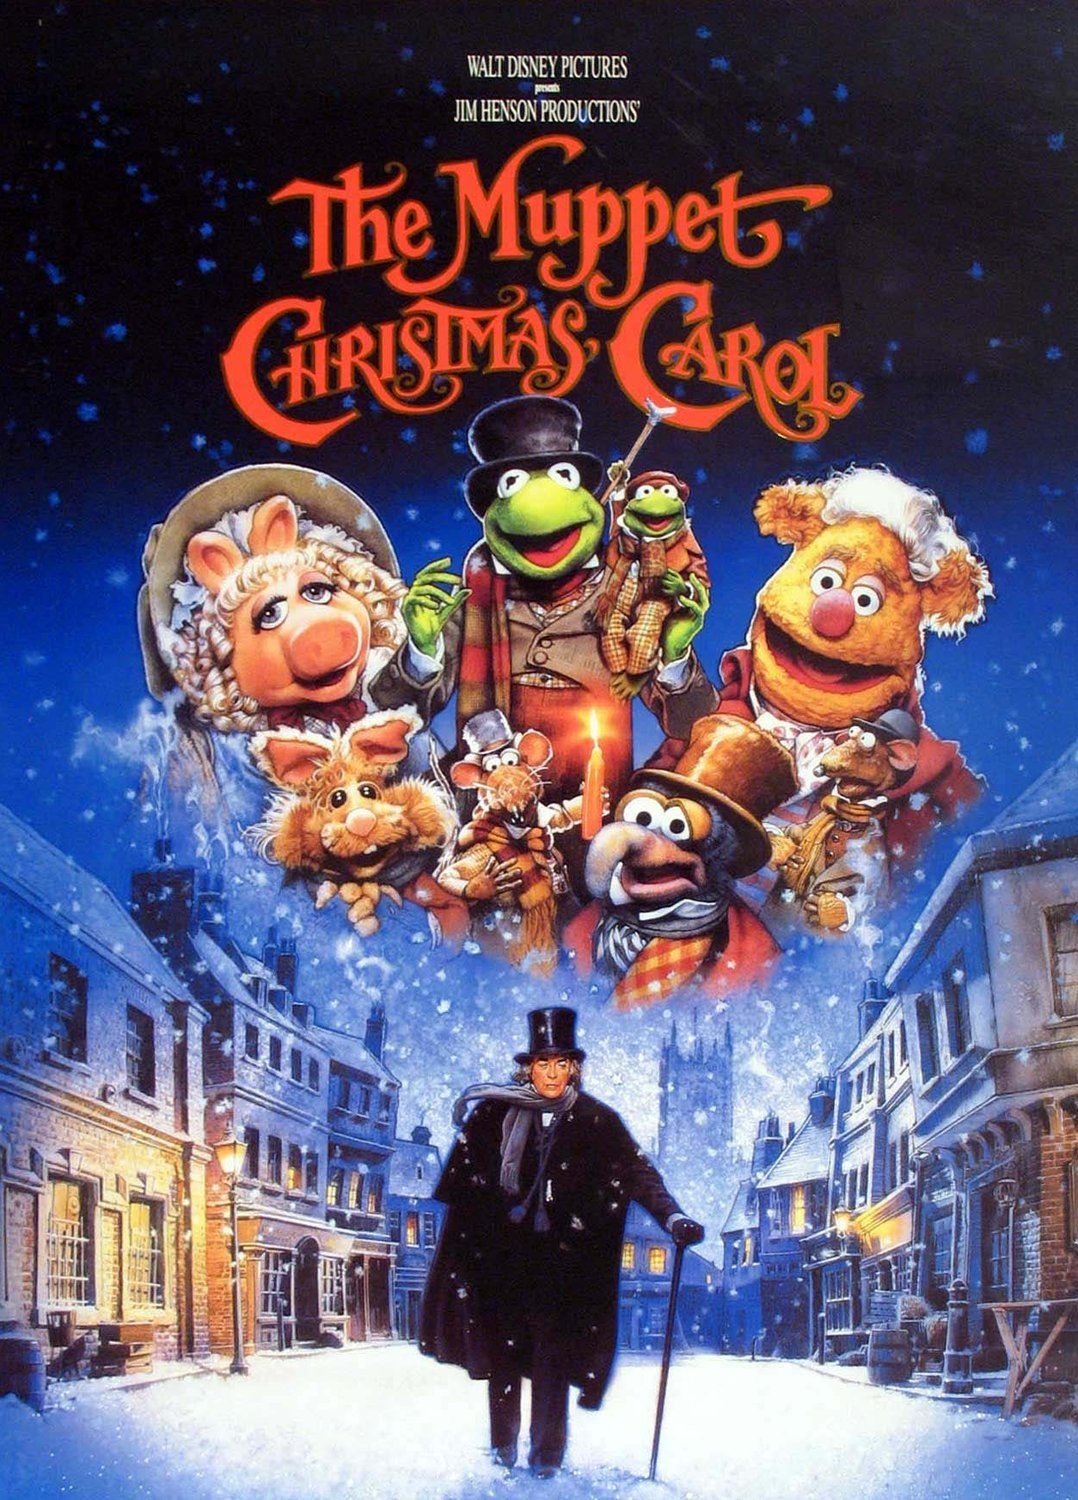 The Muppet Christmas Carlol (1992)